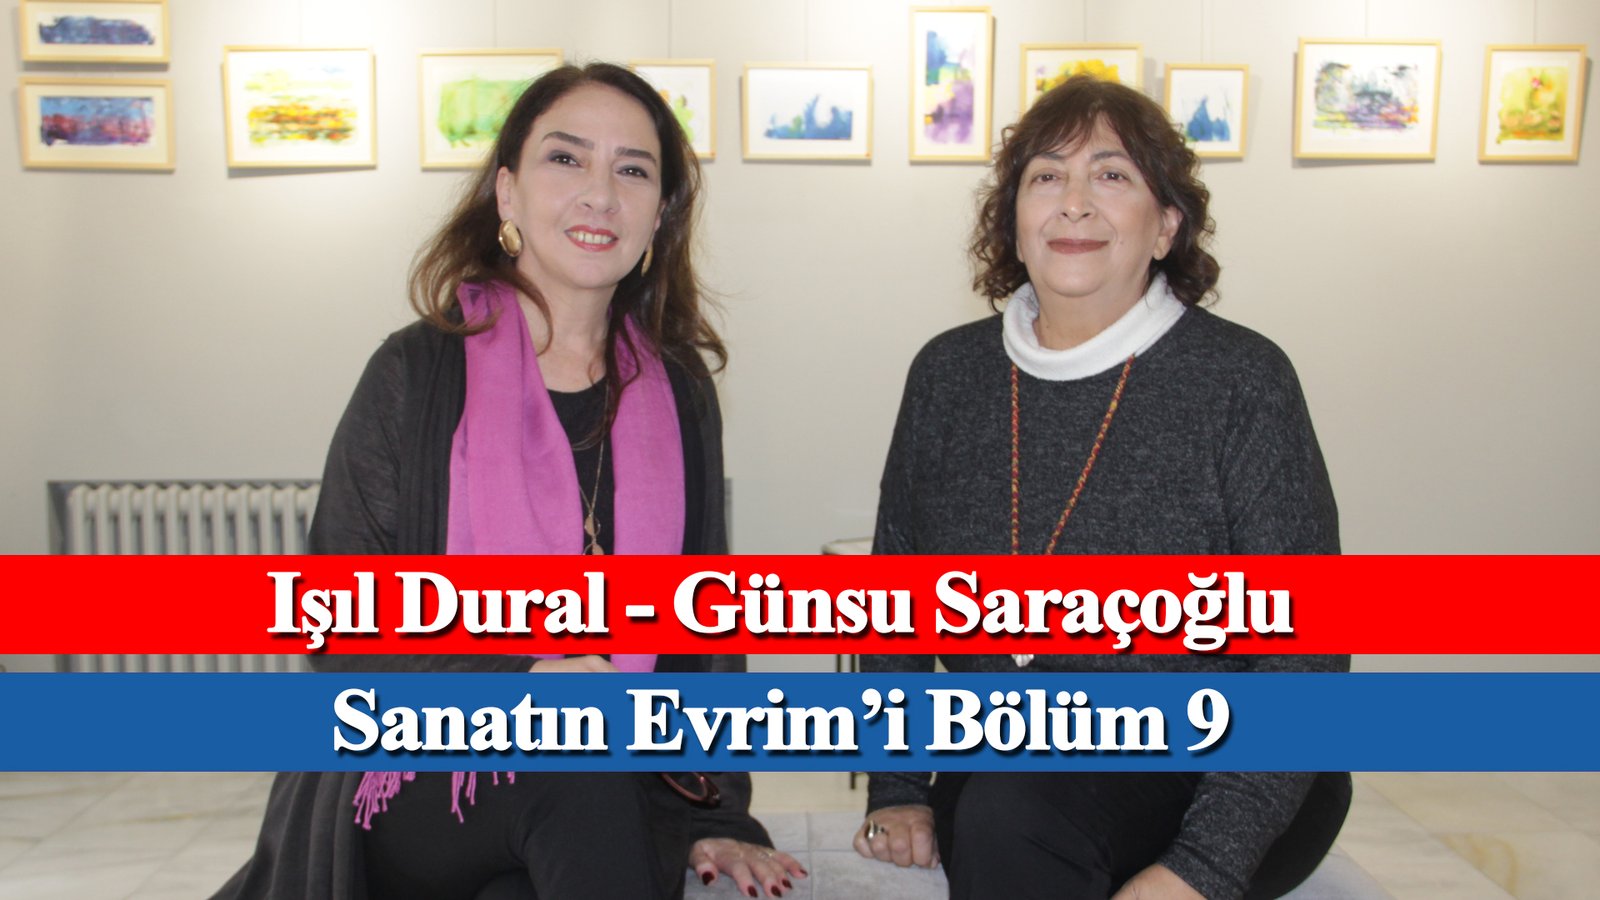 Artist Işıl Dural Is This Week's Guest In The Evolution Of Art Program